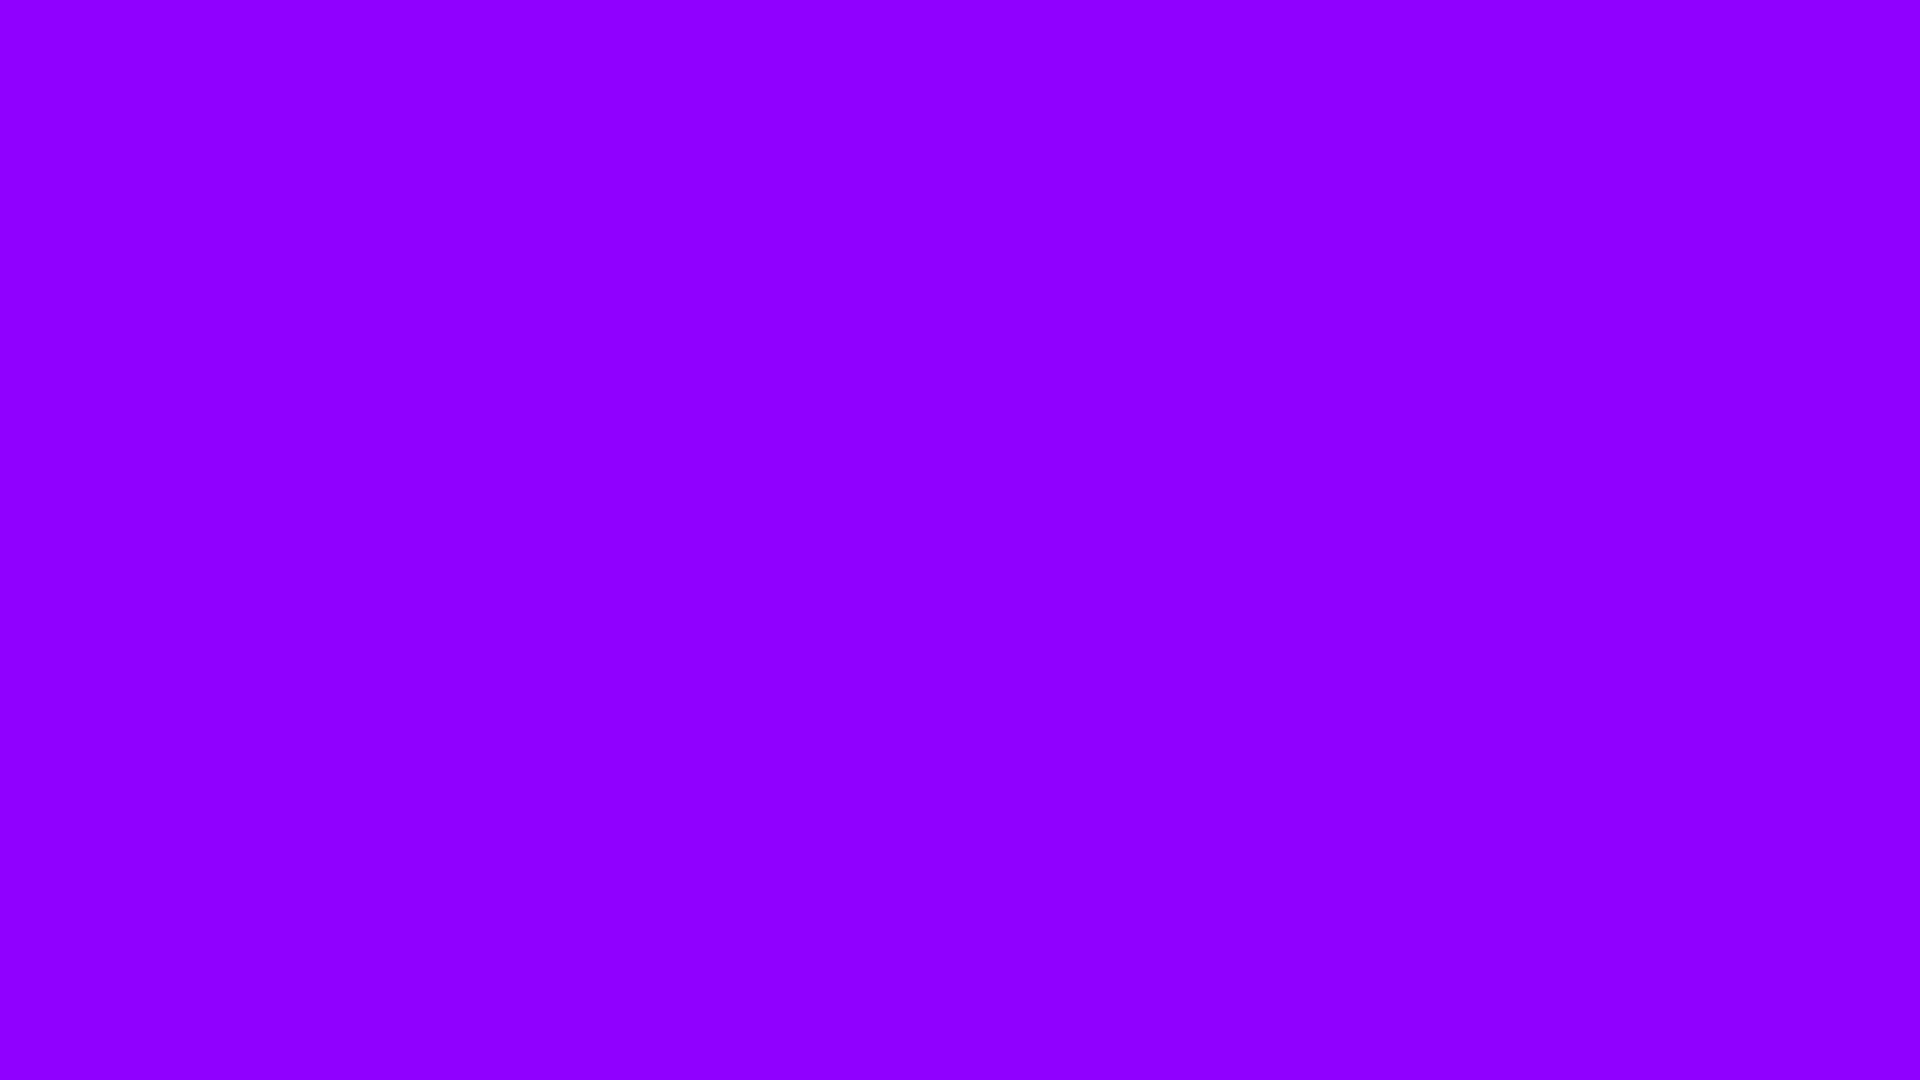 1920x1080 Electric Violet Solid Color Background